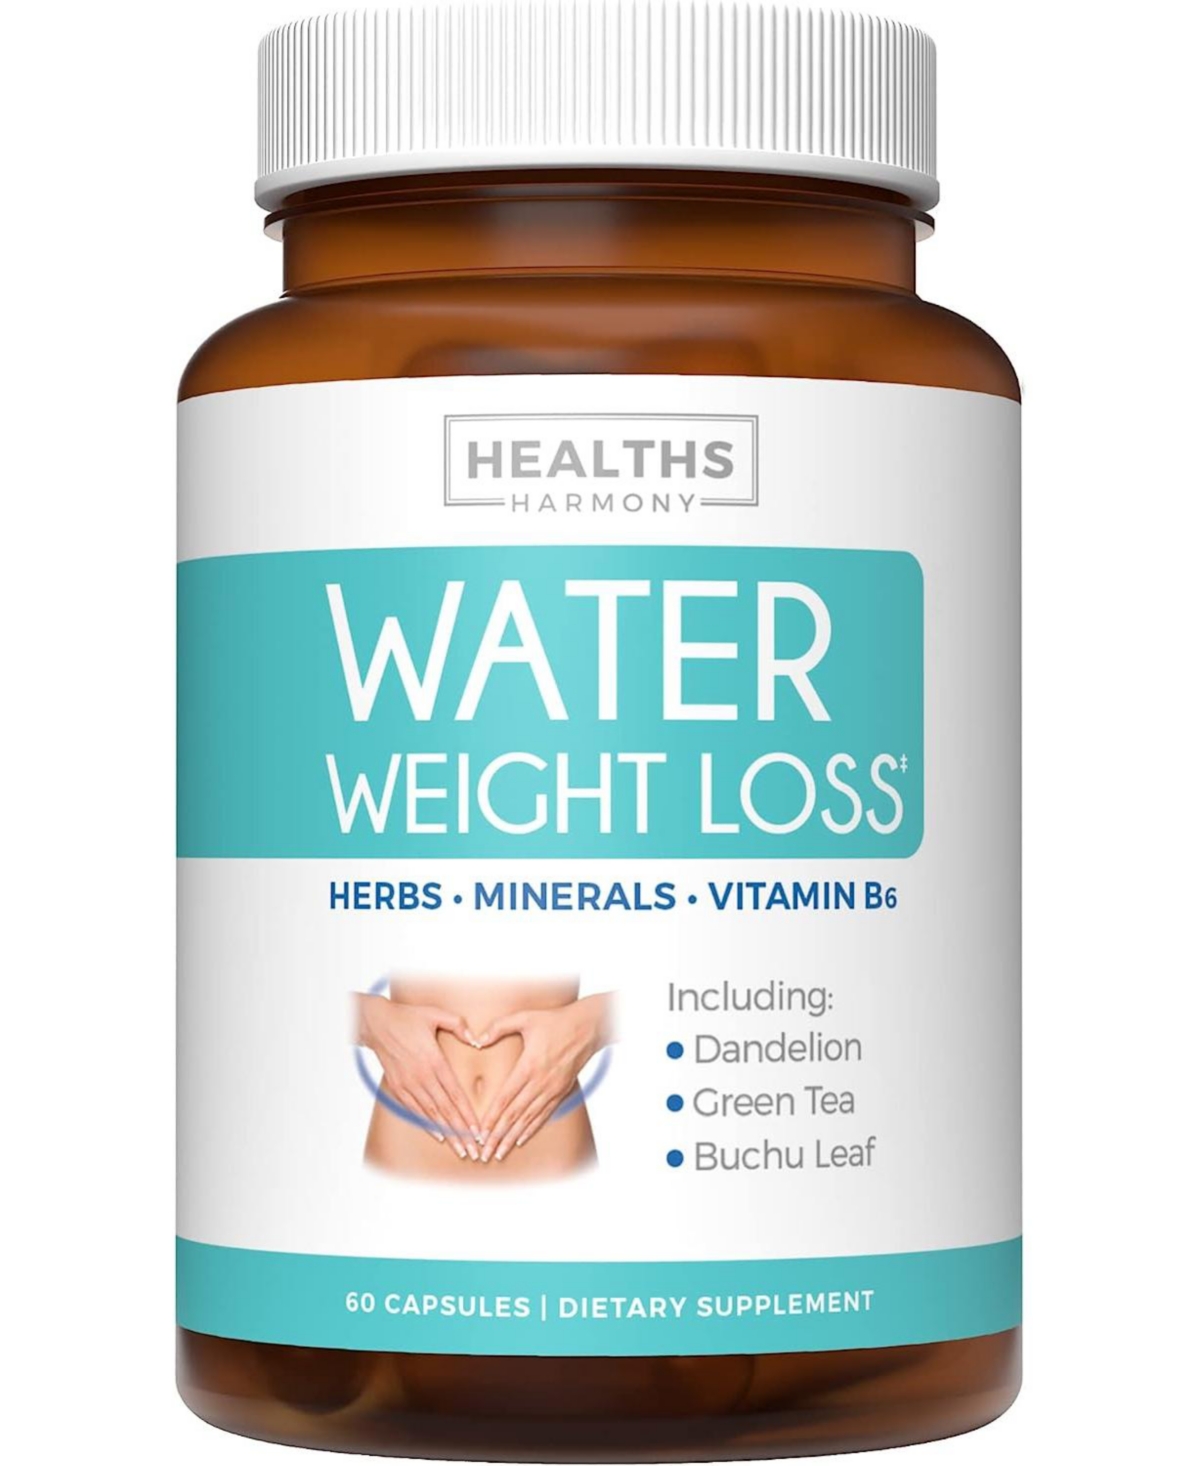 Water Pills - Natural Diuretic: Helps Relieve Bloating, Swelling & Water Retention for Water Weight Loss - Dandelion, Potassium, & Green Tea Herbal Re